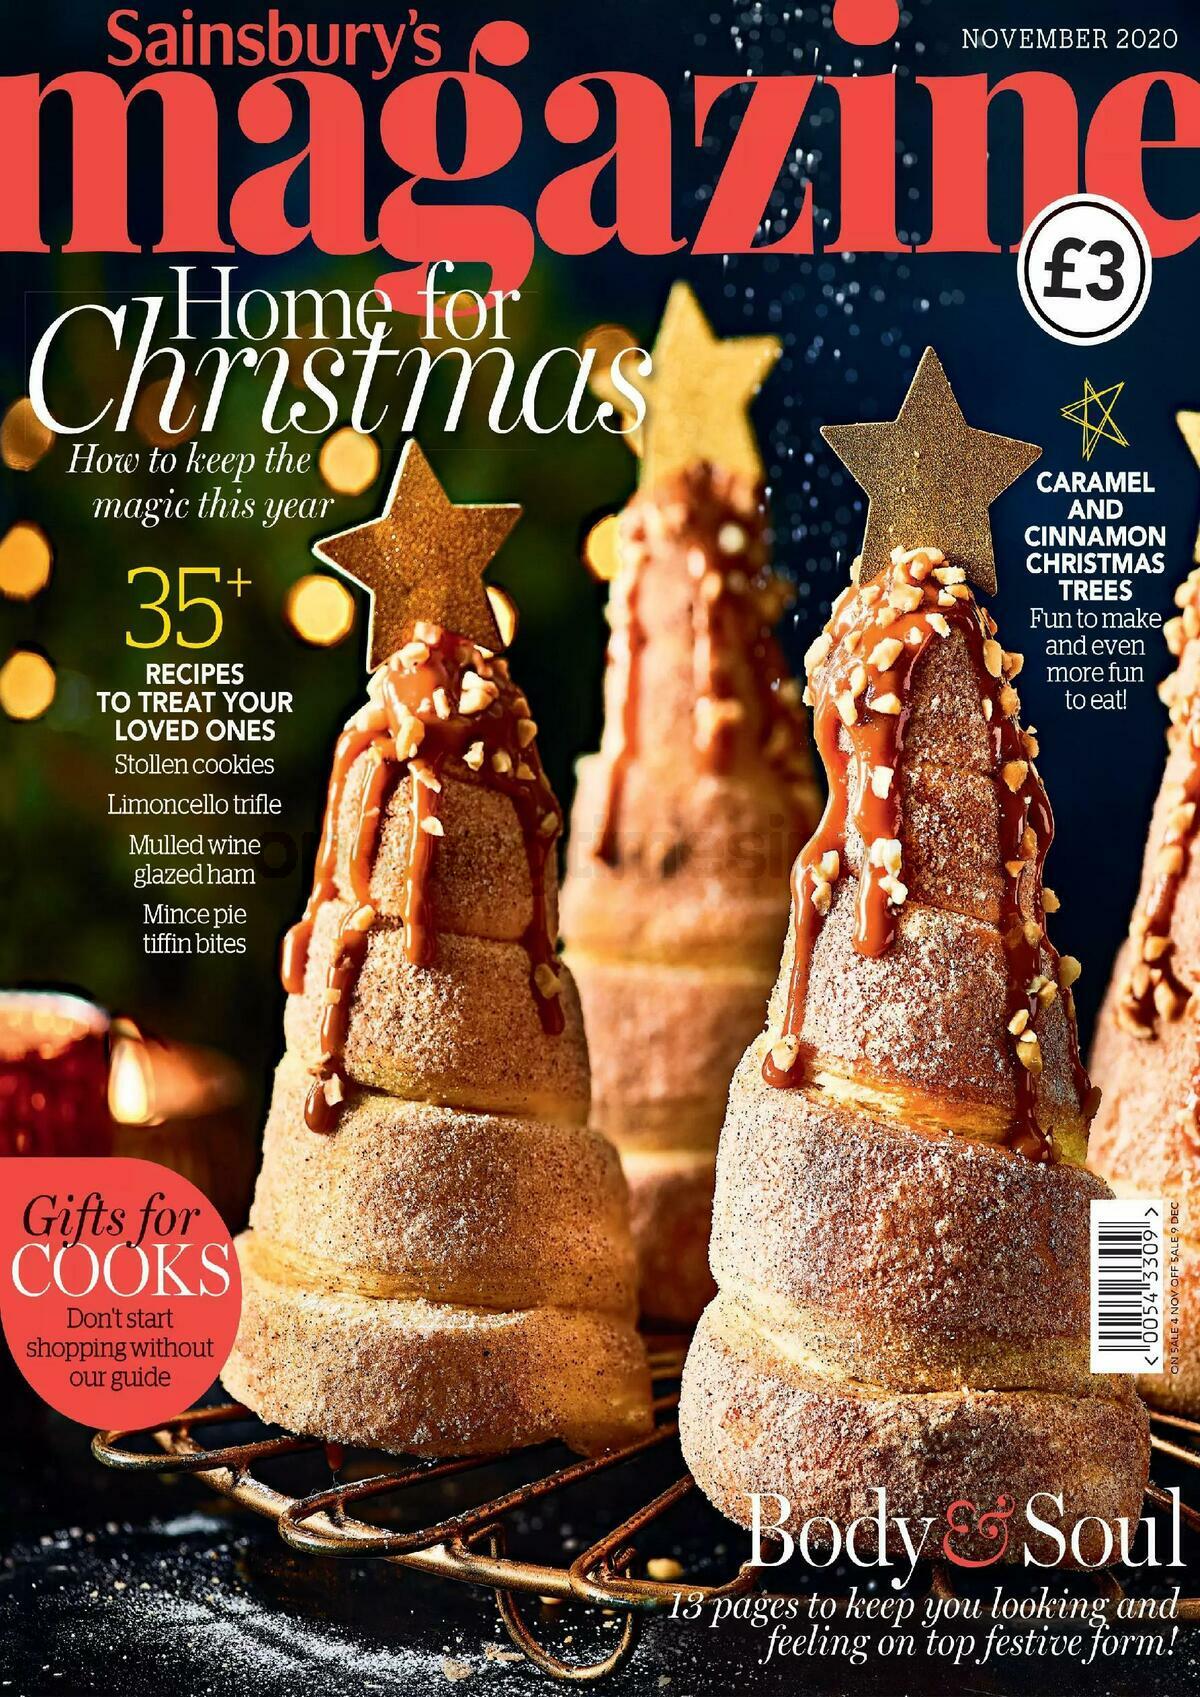 Sainsbury's Magazine November 2020 Offers from 1 November